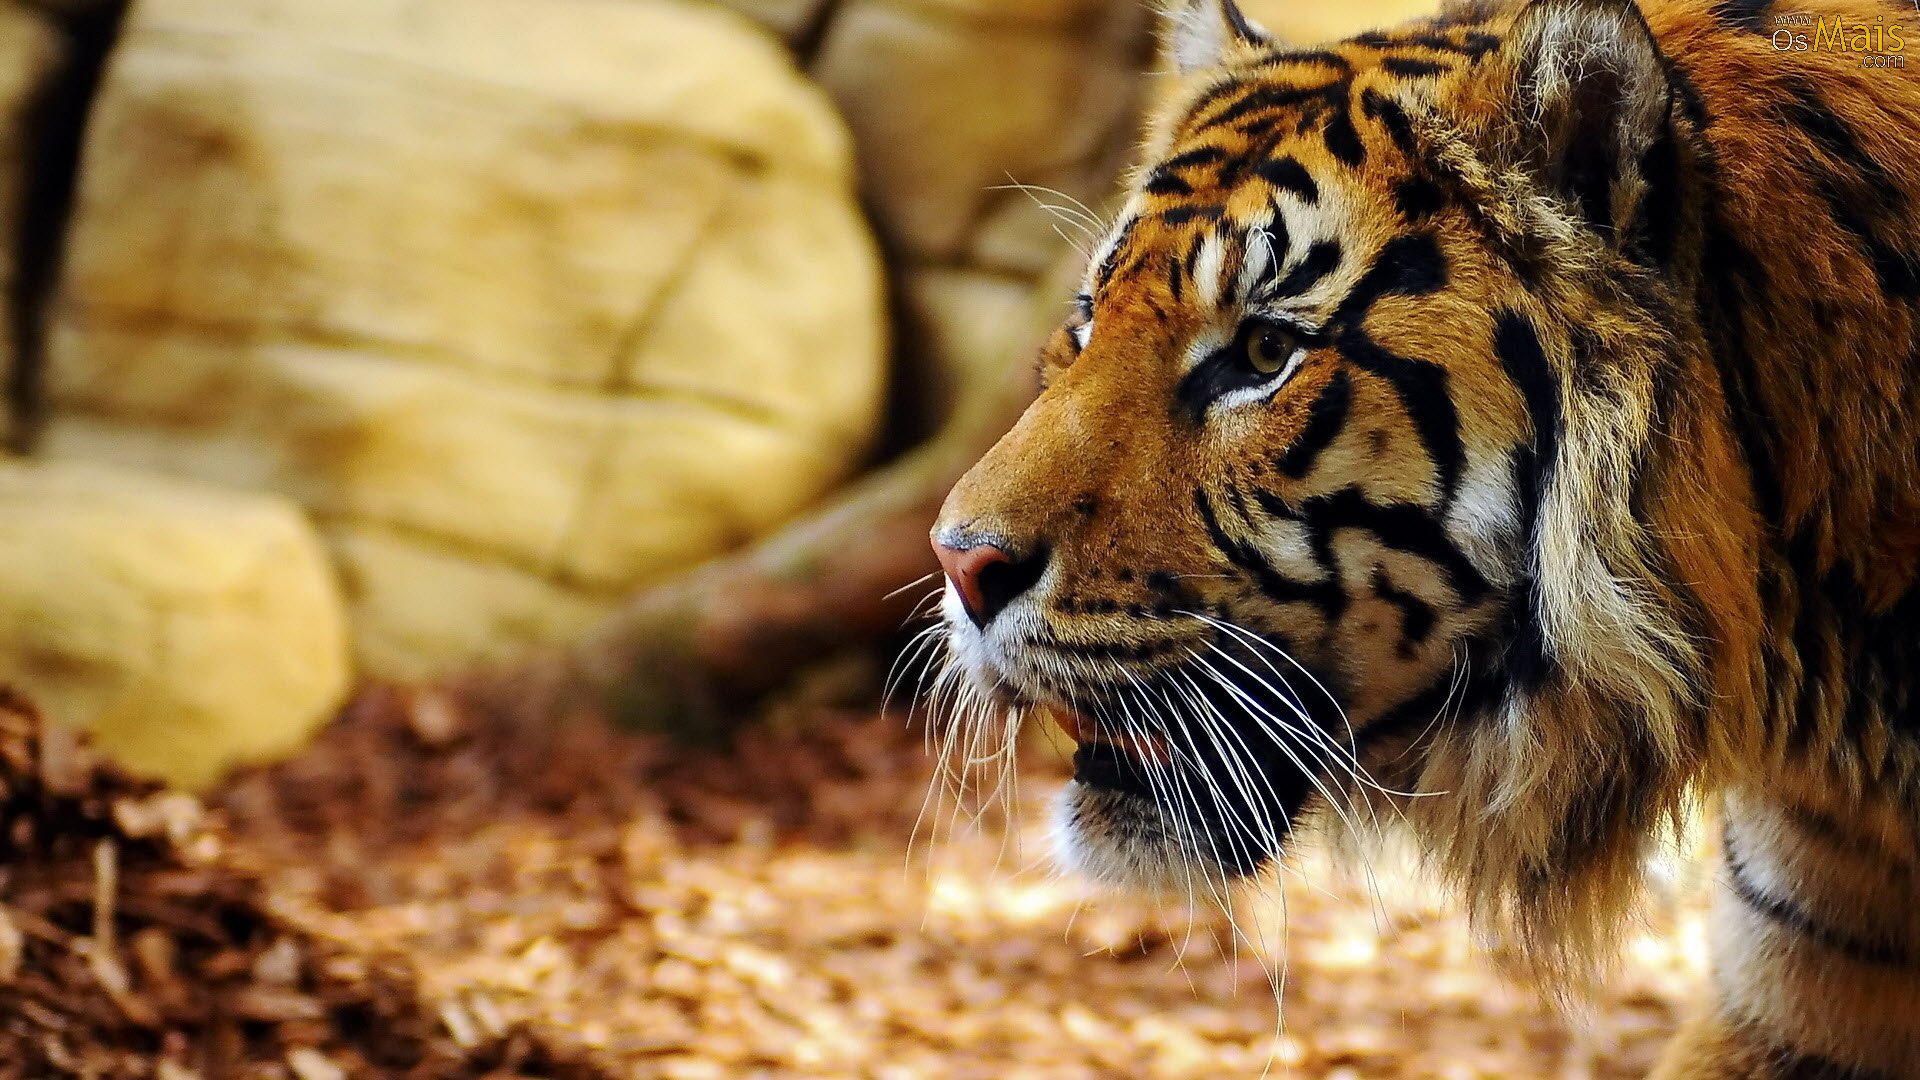 fond d'écran tigre,tigre,faune,animal terrestre,tigre du bengale,félidés